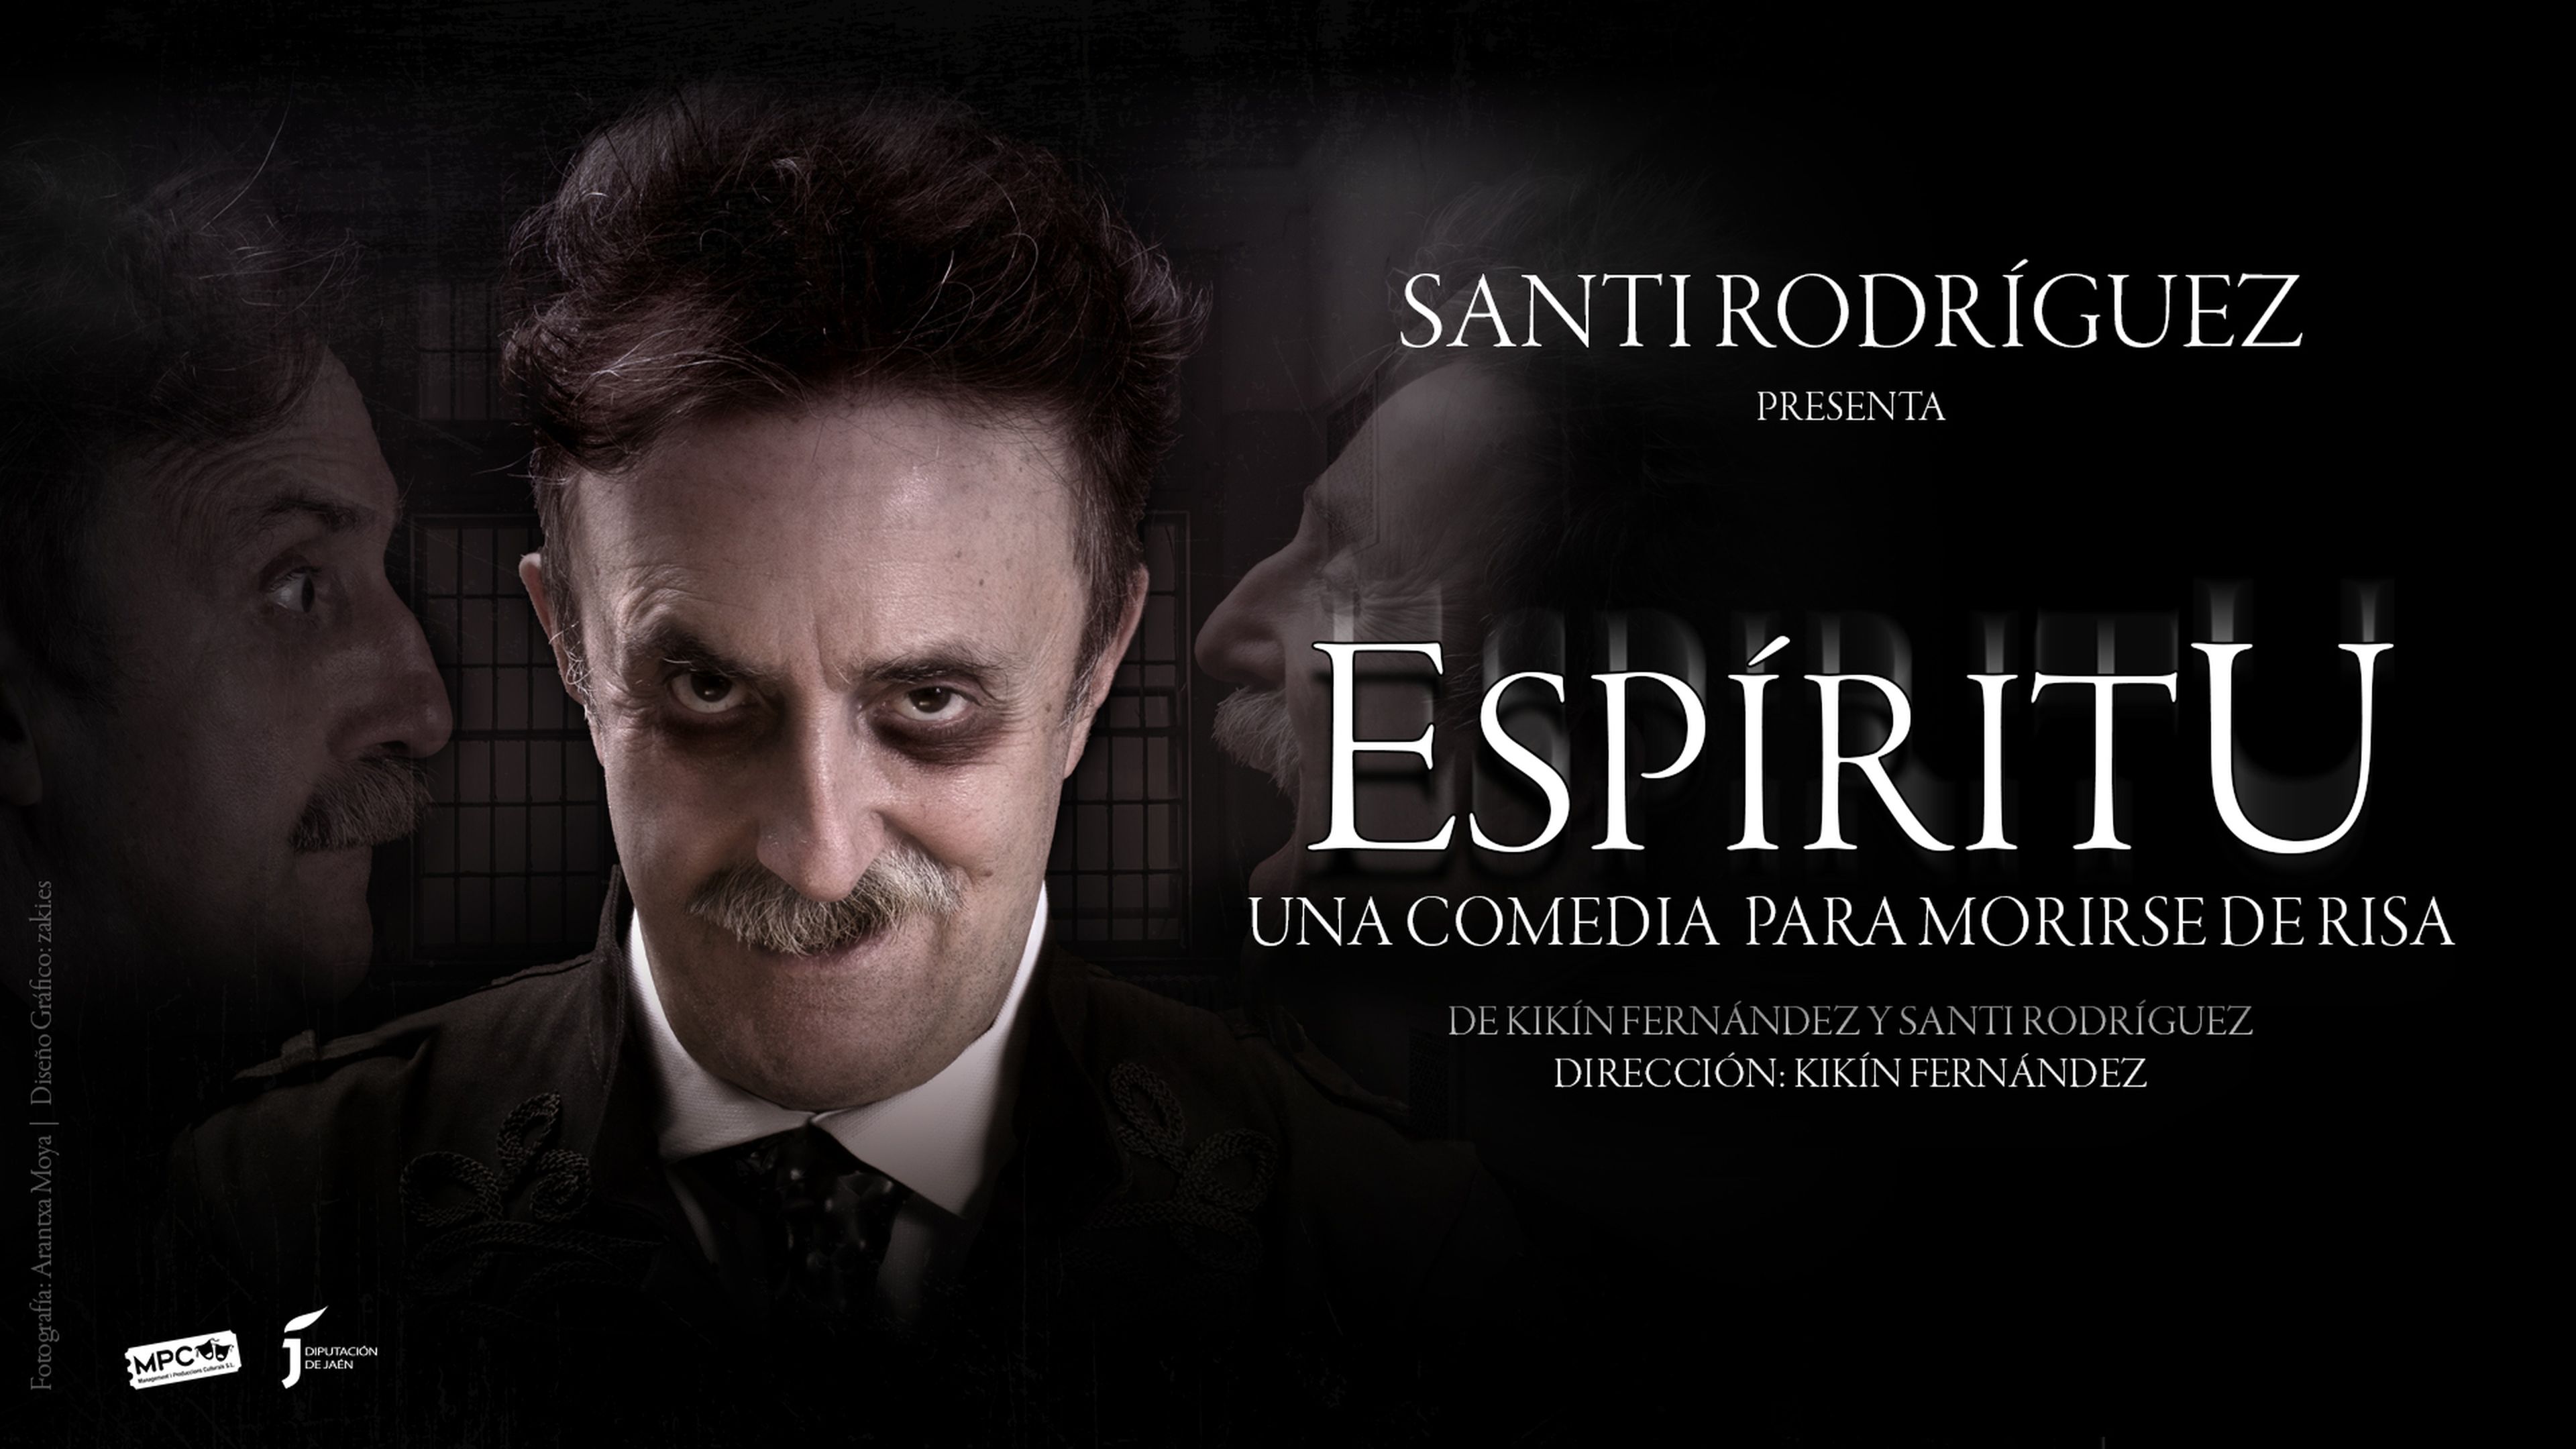 Santi Rodríguez Espíritu